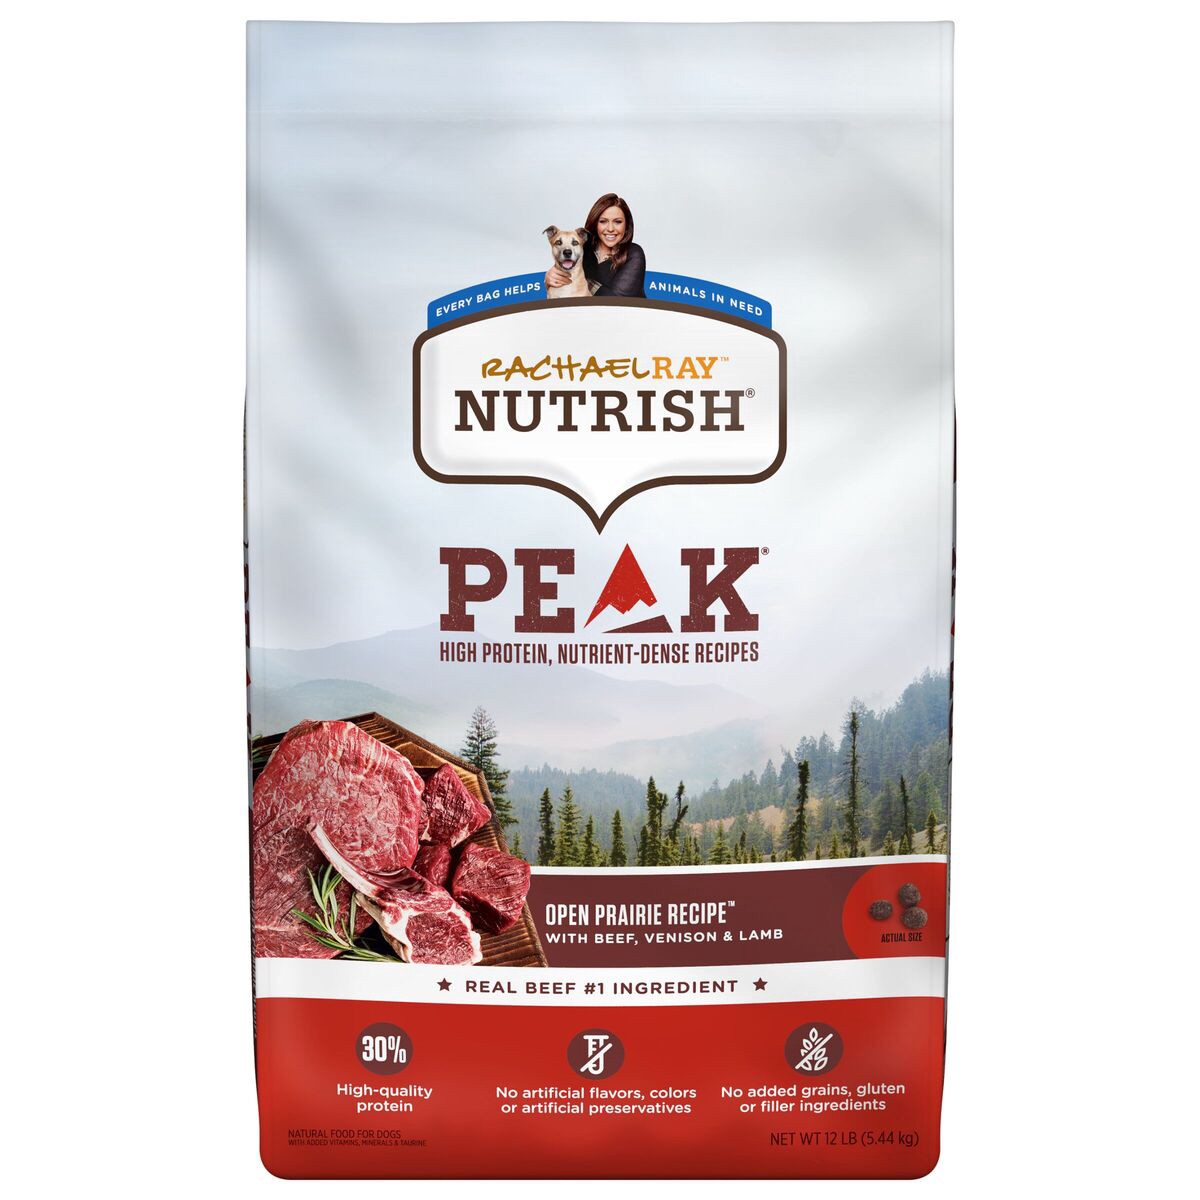 slide 1 of 14, Rachael Ray Nutrish Peak Protein Open Prairie Recipe With Beef, Venison & Lamb Dry Dog Food, 12 lb. Bag, 12 lb